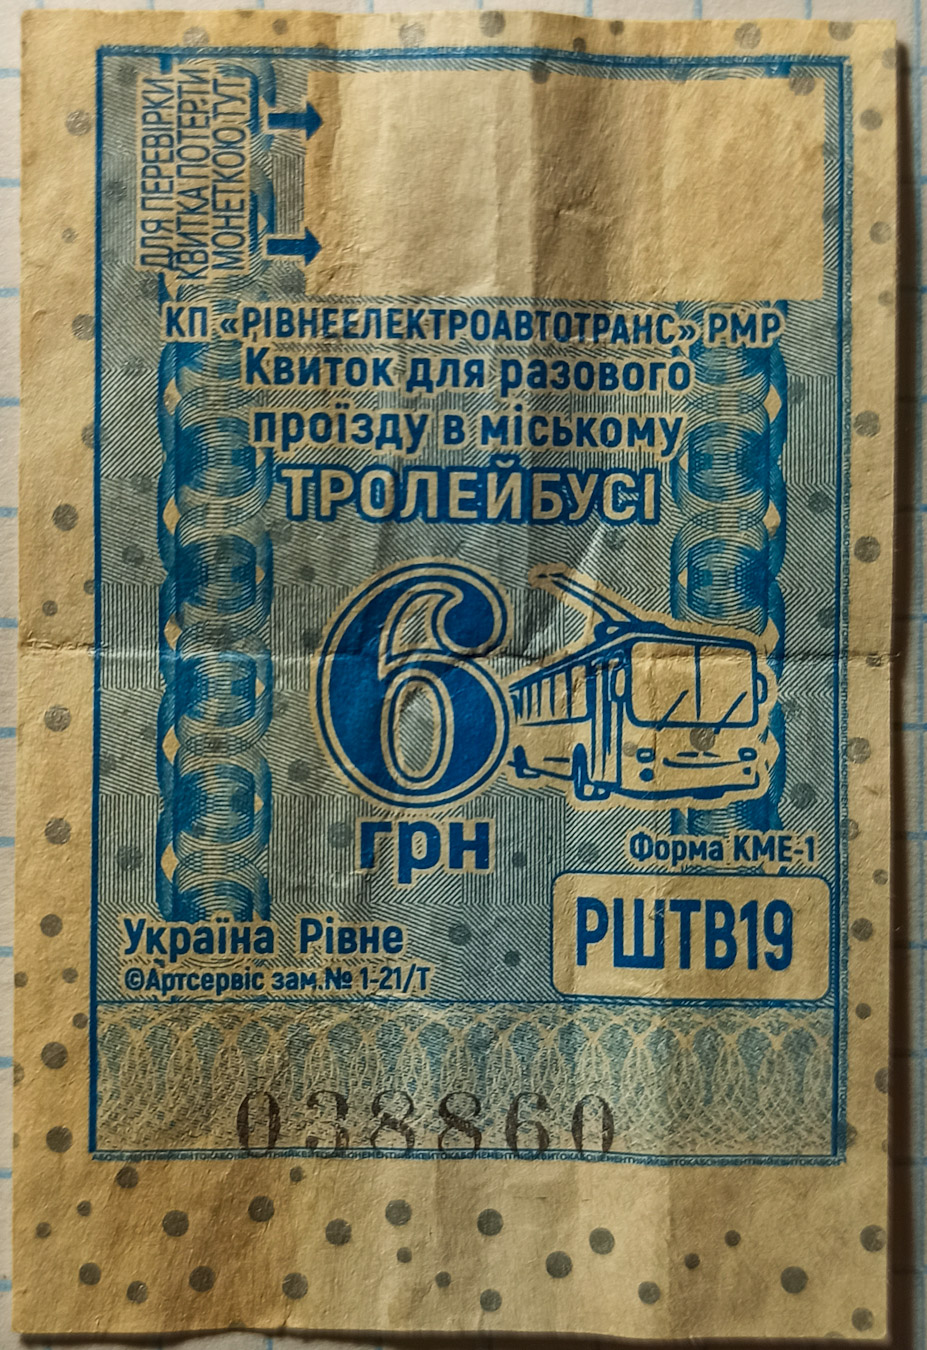 Rivne — Tickets